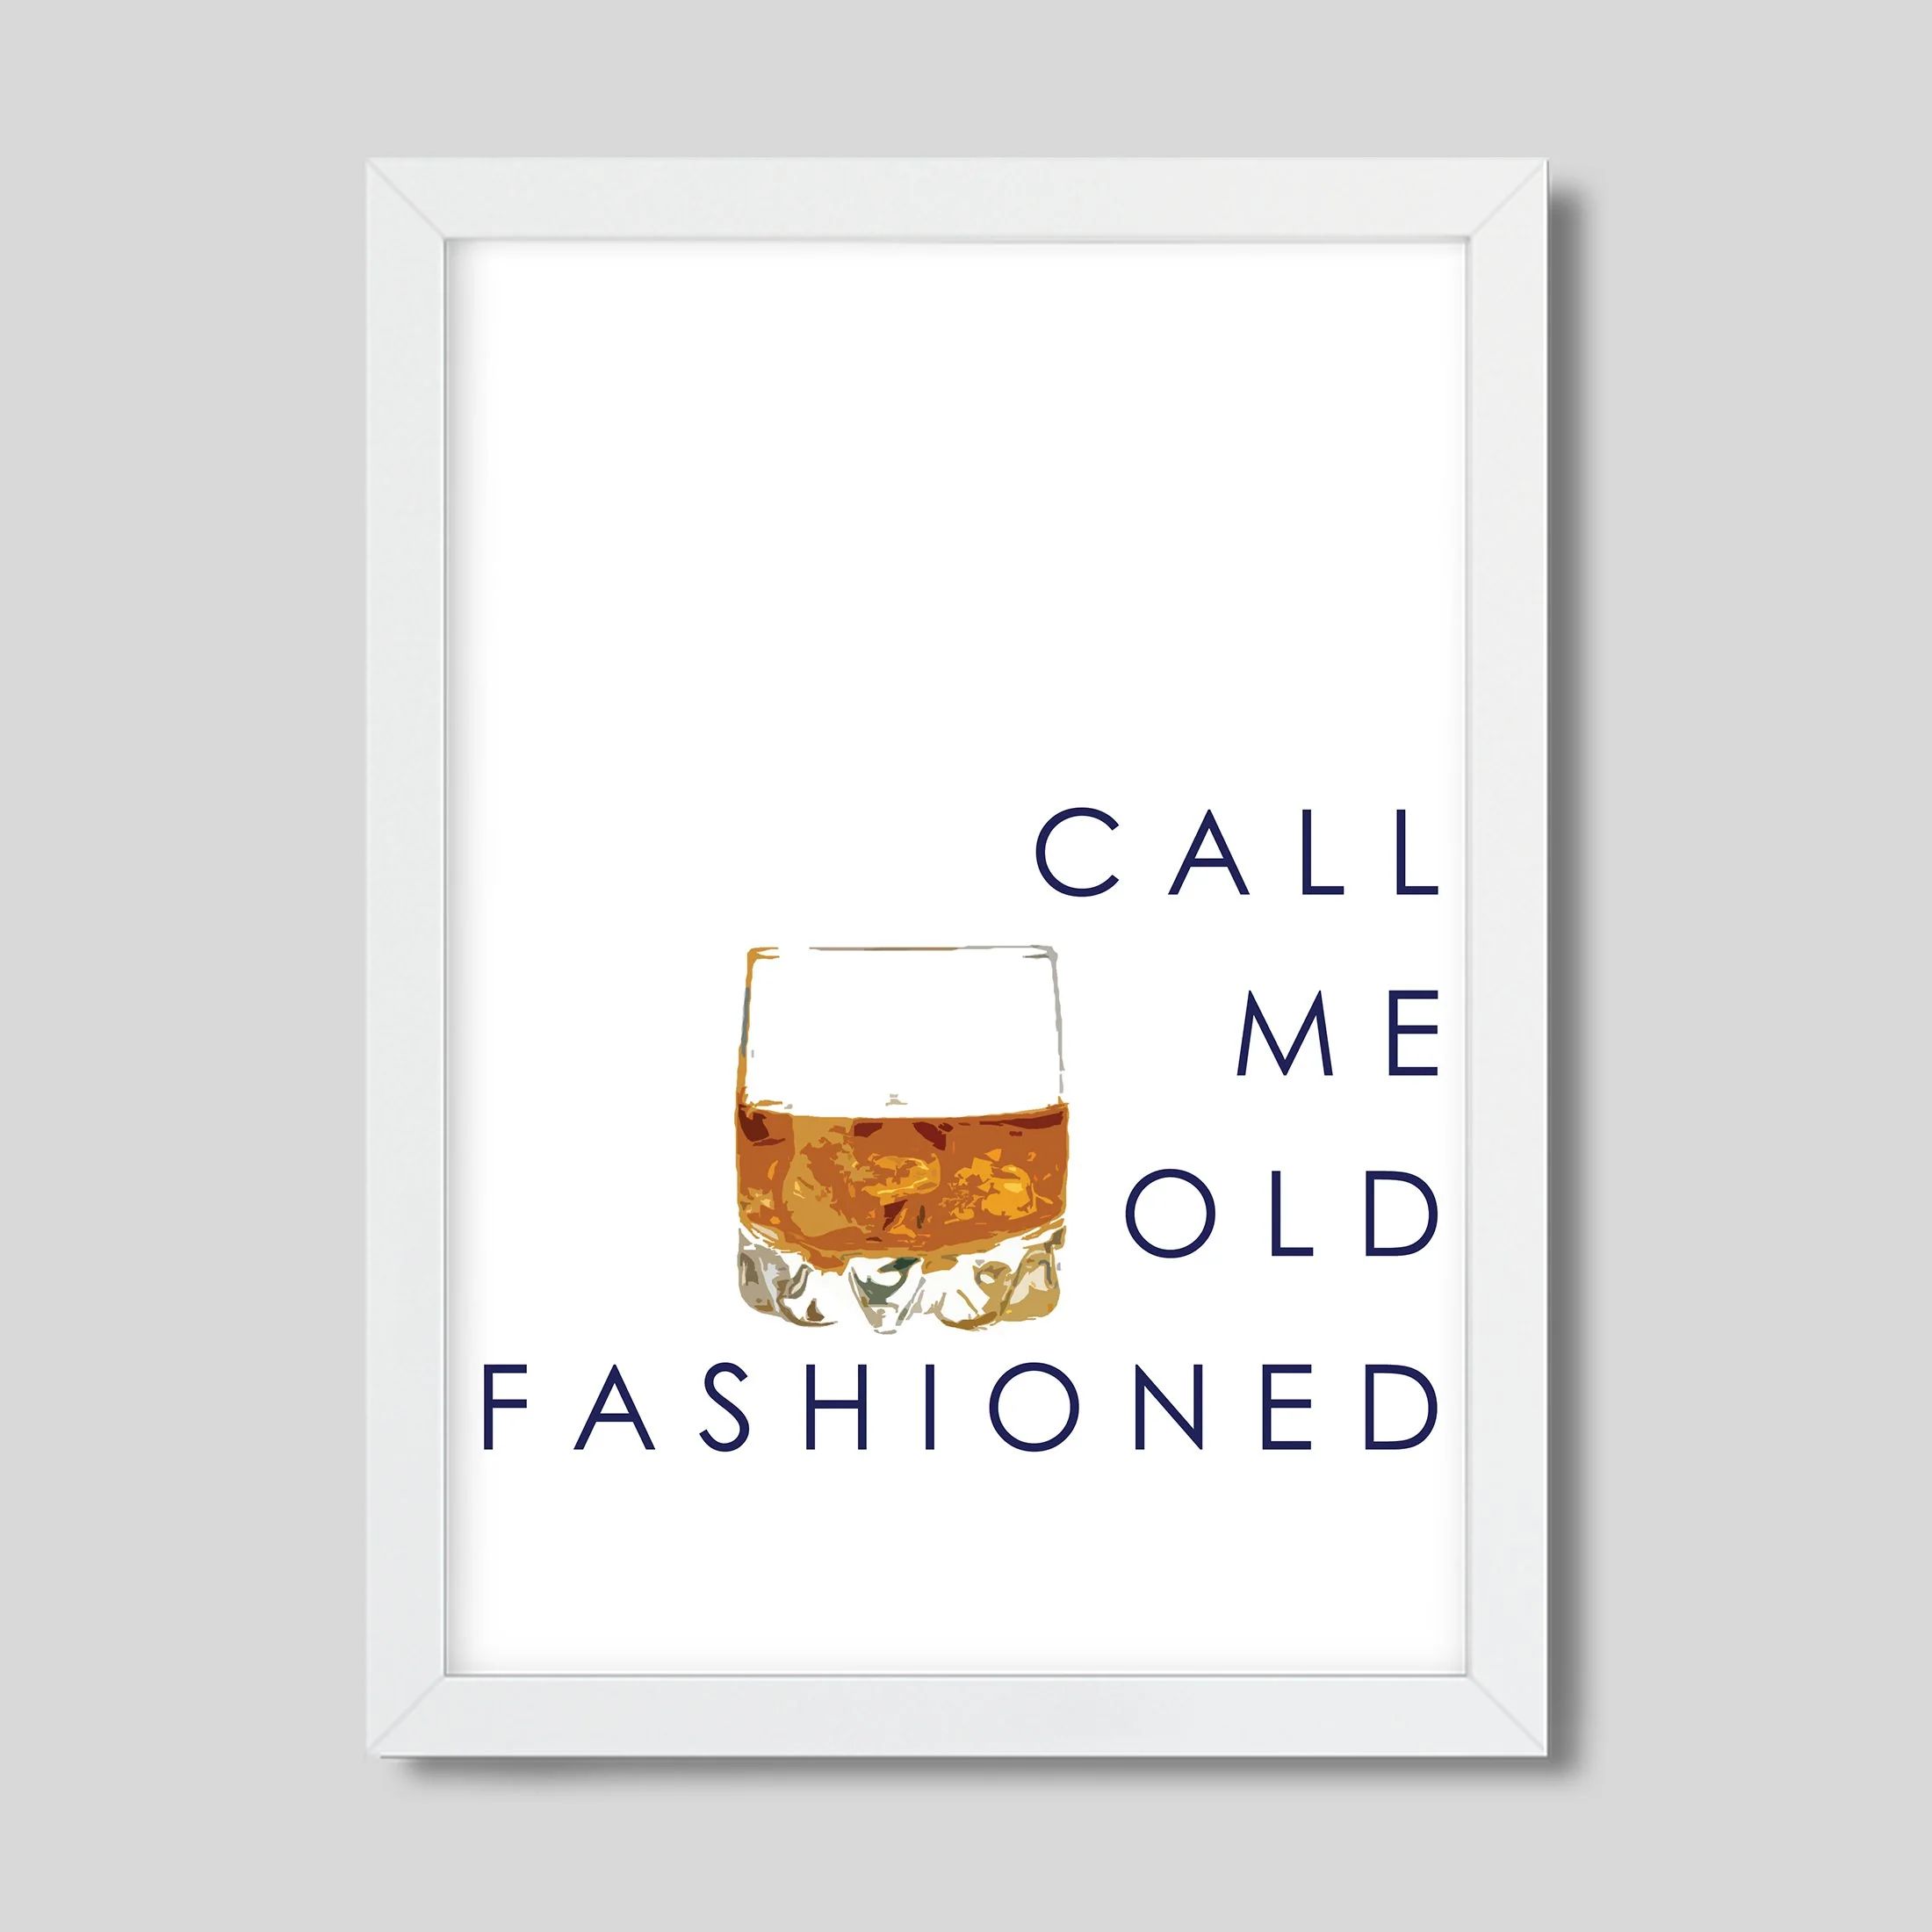 Call Me Old Fashioned Print | Colorful Prints, Wallpaper, Pajamas, Home Decor, & More | Katie Kime Inc